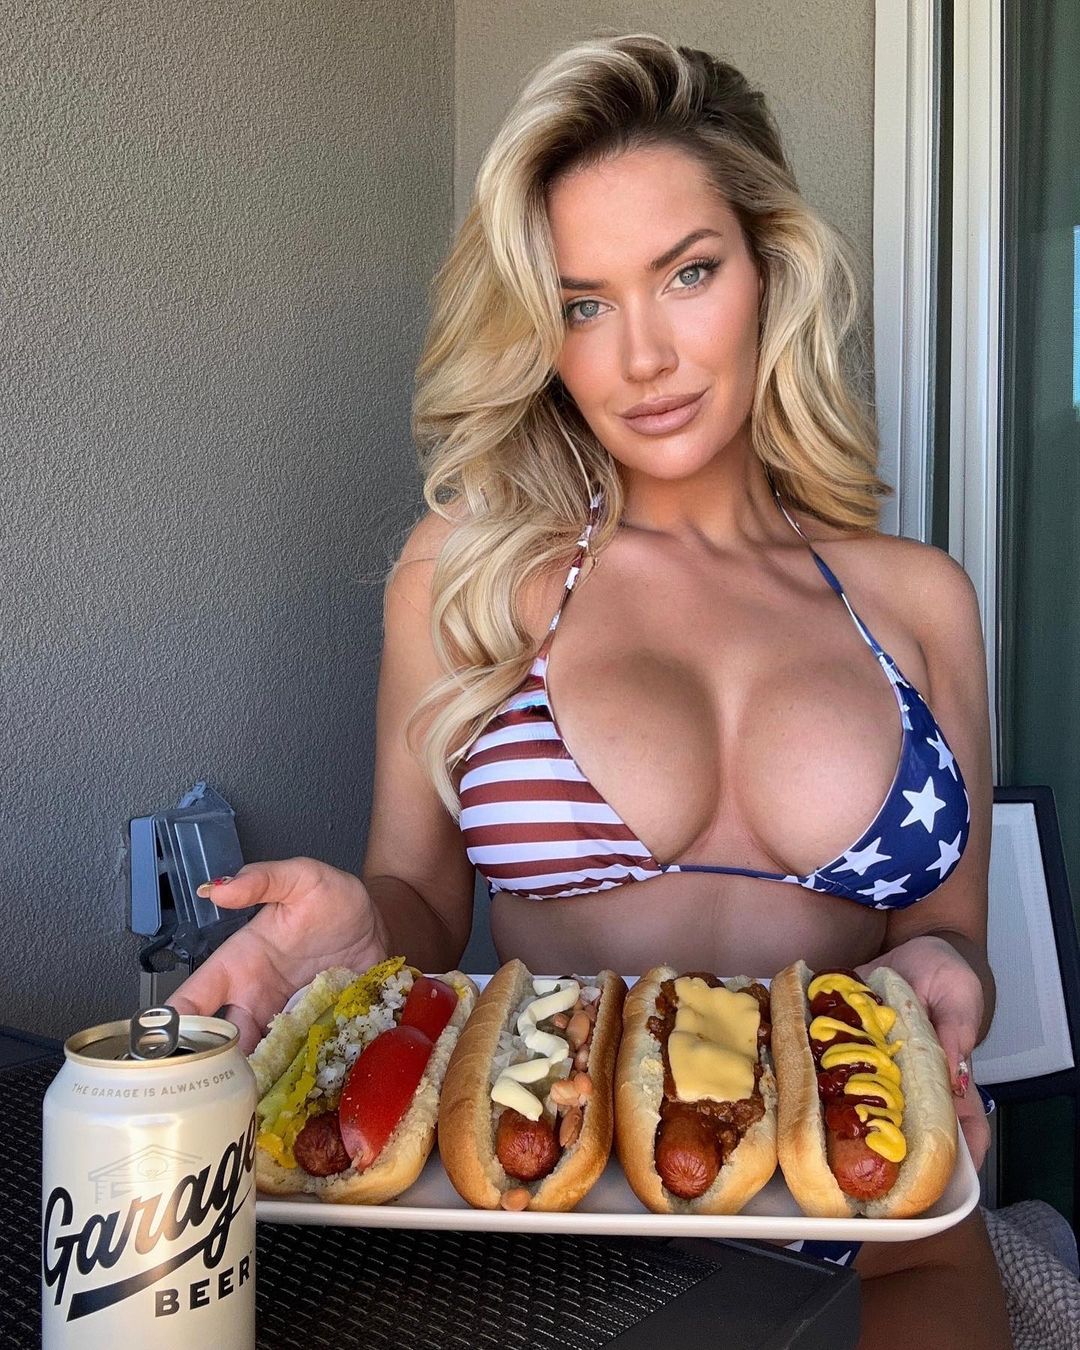 Paige feierte die US Open im Stars-and-Stripes-Bikini und aß Hotdogs